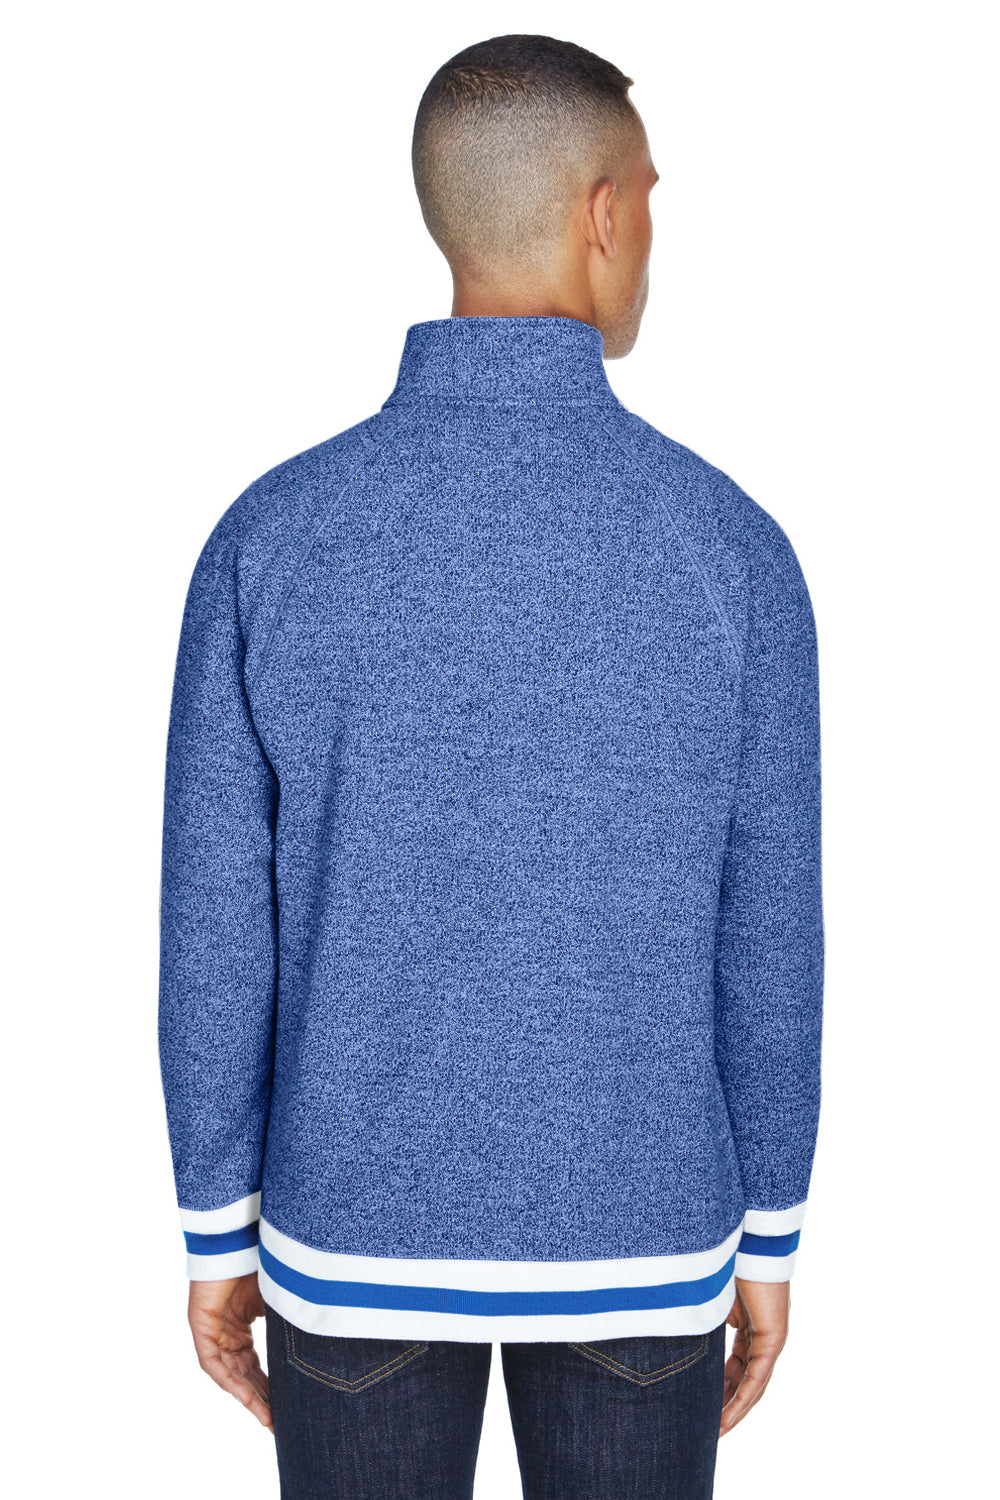 J America JA8703 Mens Peppered Fleece 1/4 Zip Sweatshirt Royal Blue Back